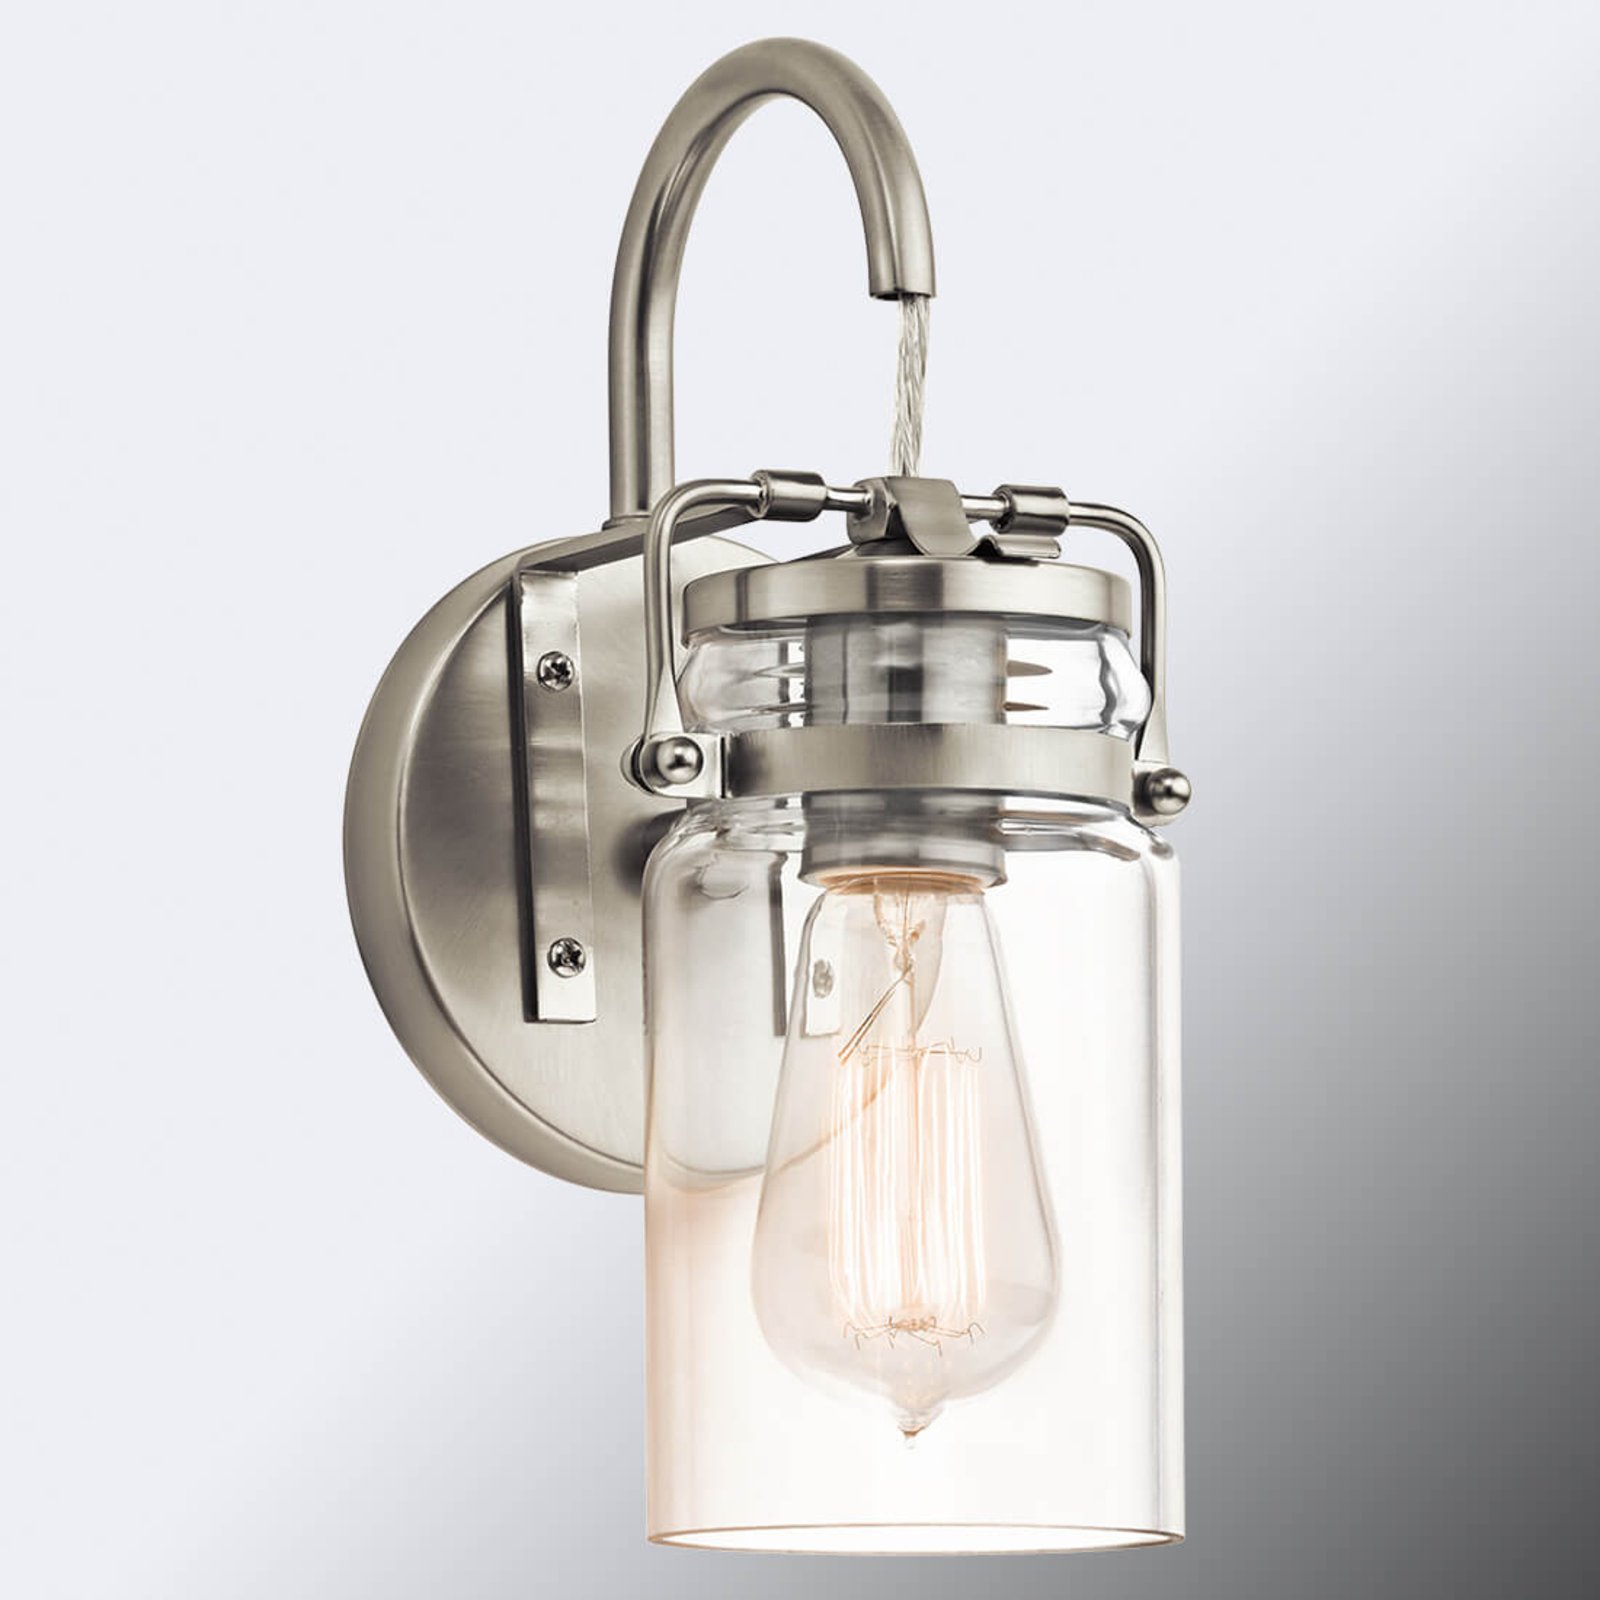 Vägglampa Brinley i vintage-design